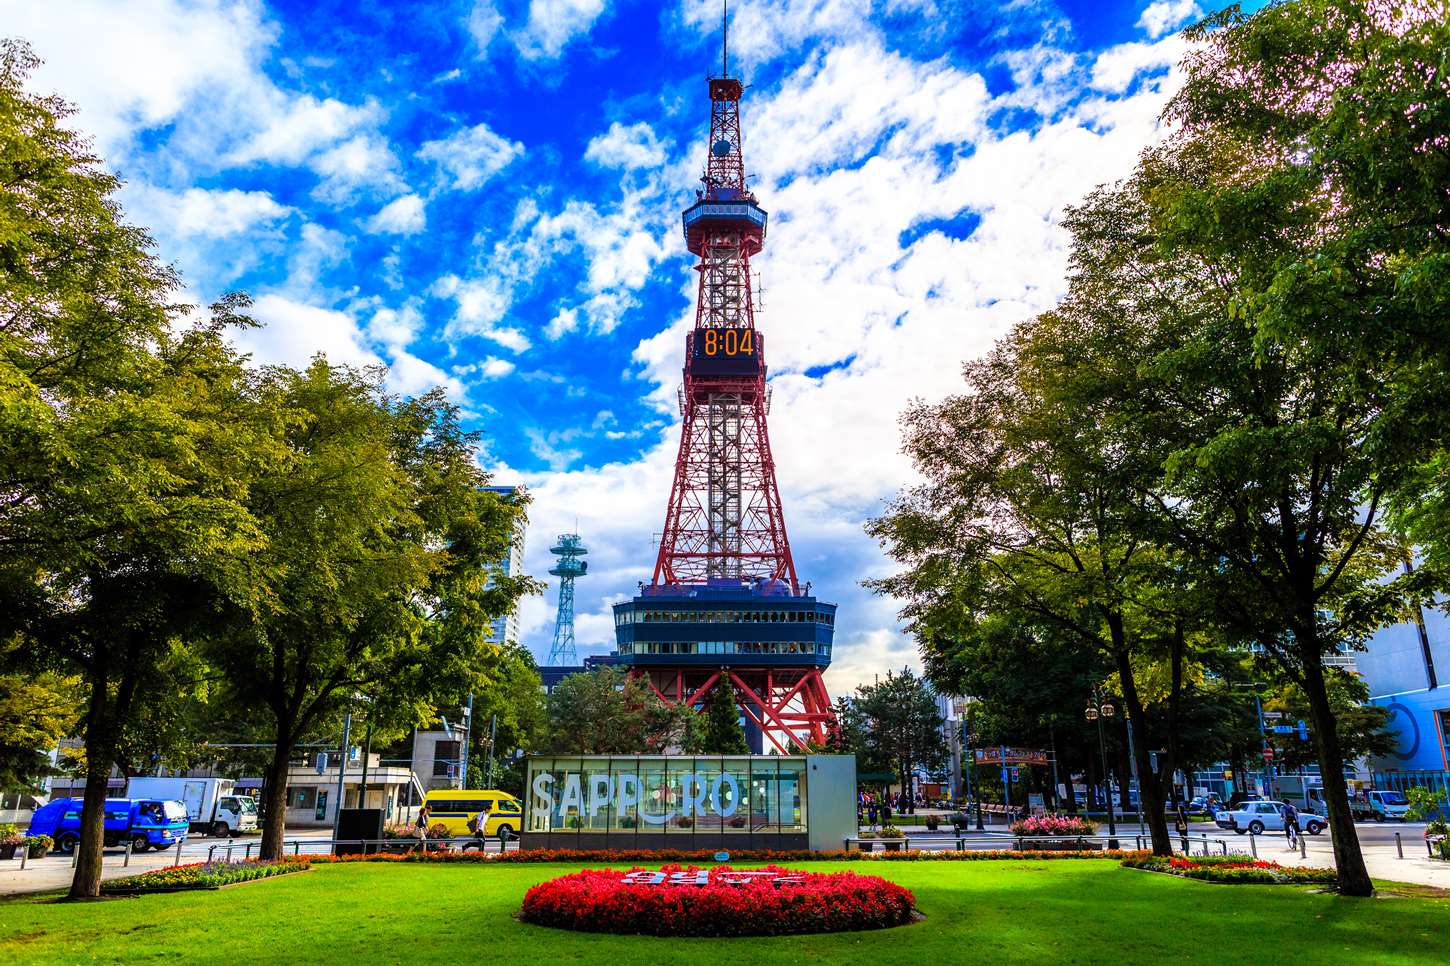 Sapporo TV Tower and Odori park in Sapporo, Japan